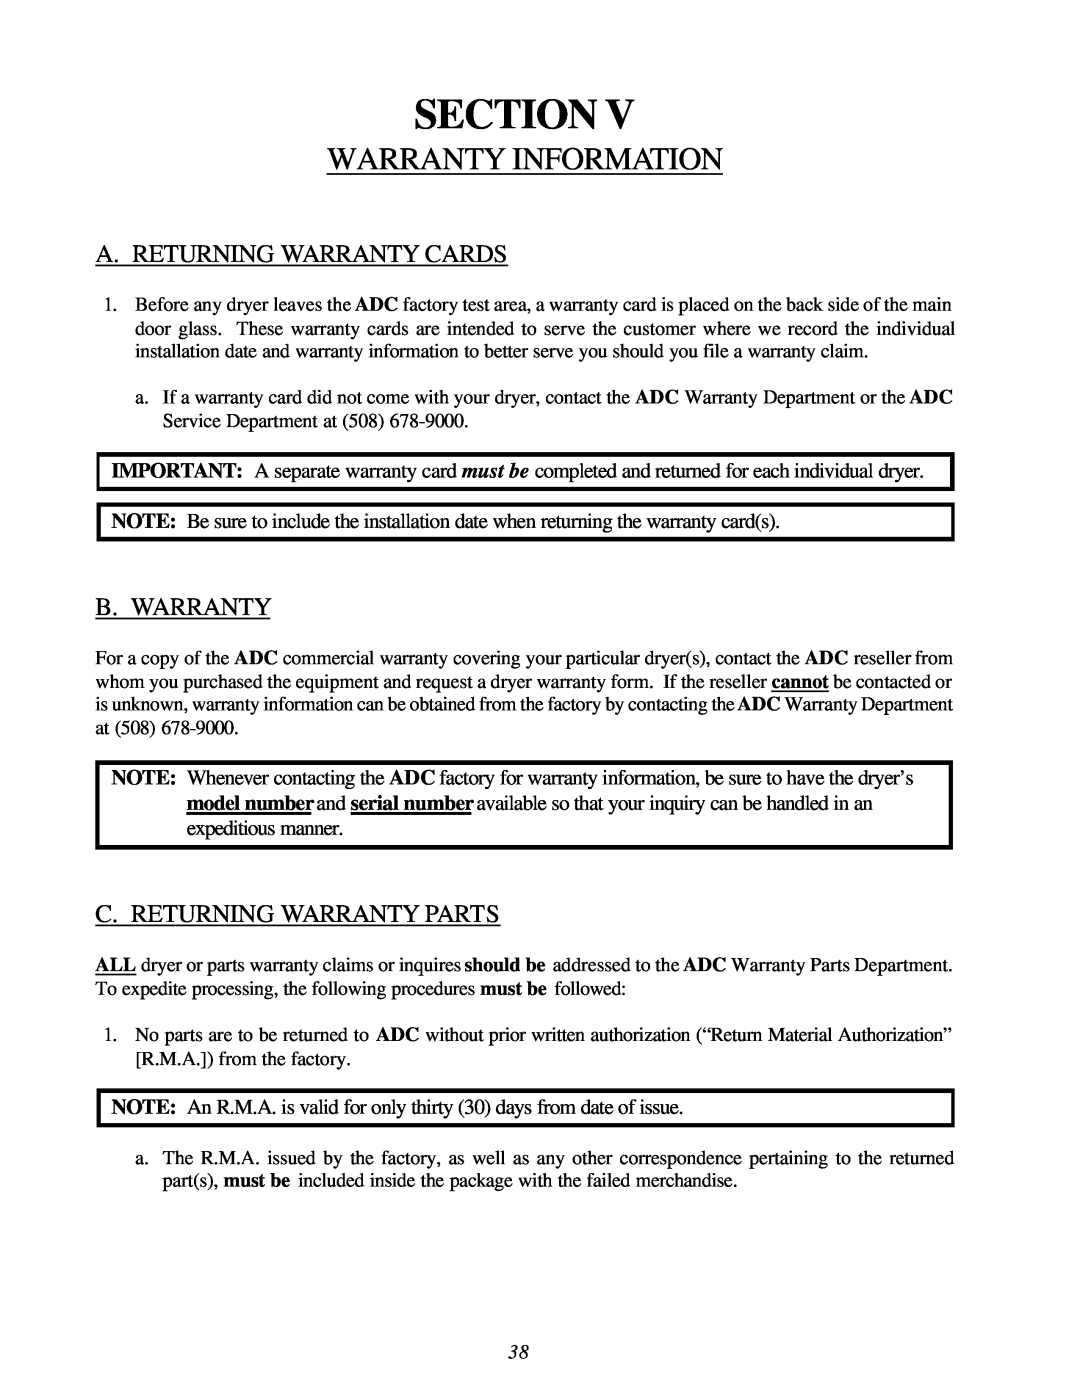 American Dryer Corp ML-122D installation manual Warranty Information, Section, A. Returning Warranty Cards, B. Warranty 